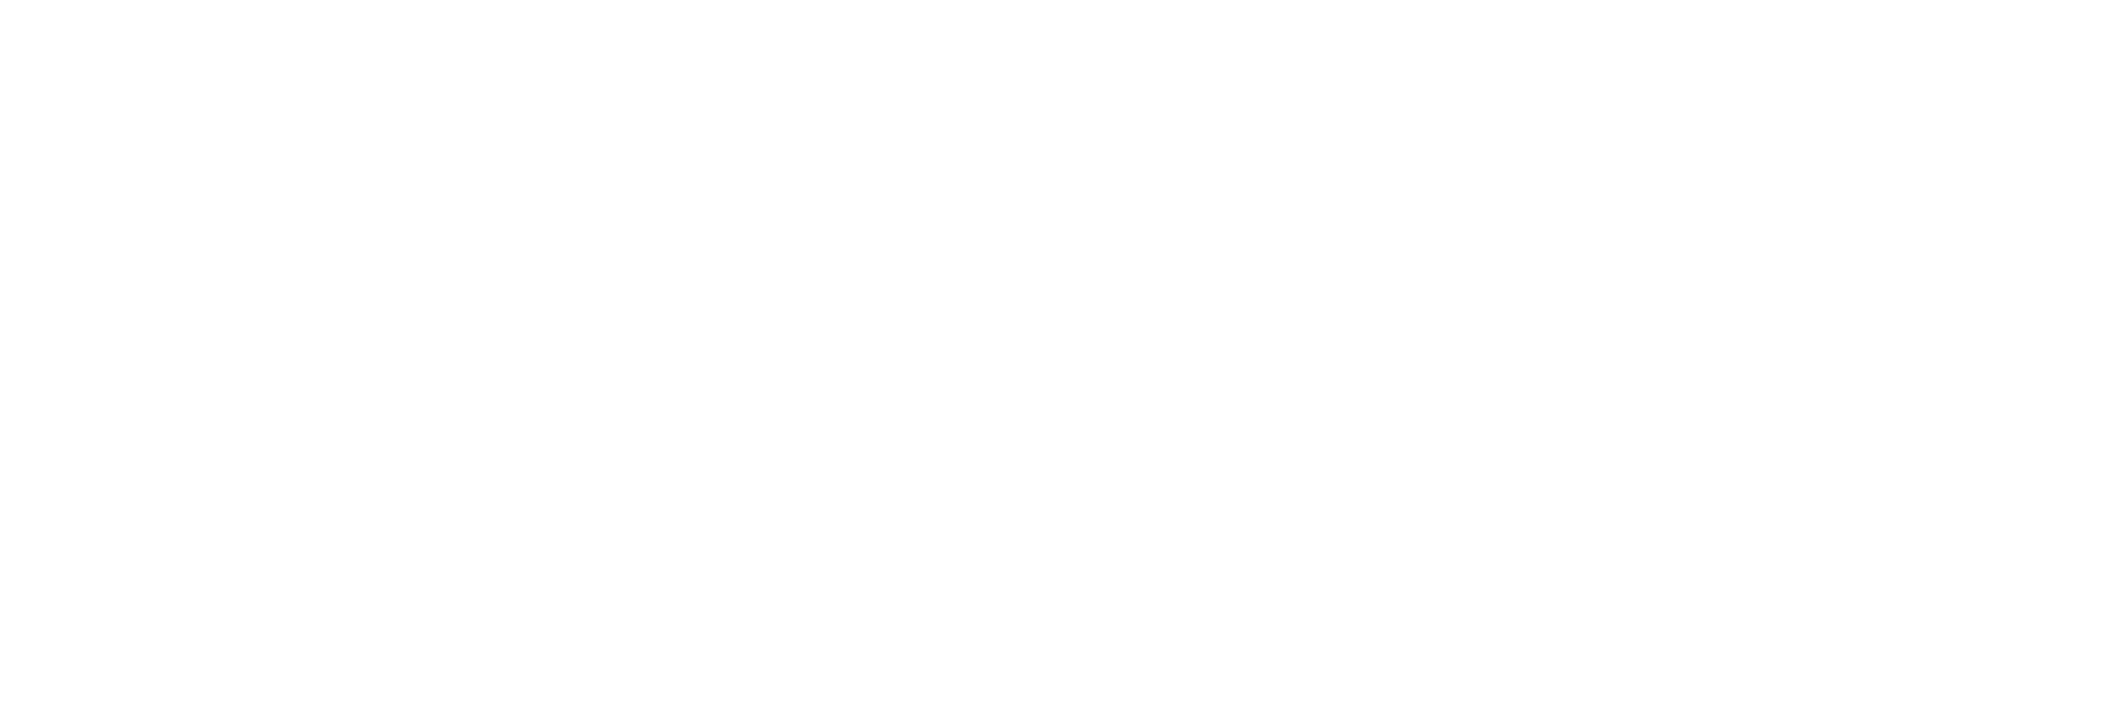 Solid State Ionics 24 – SSI24